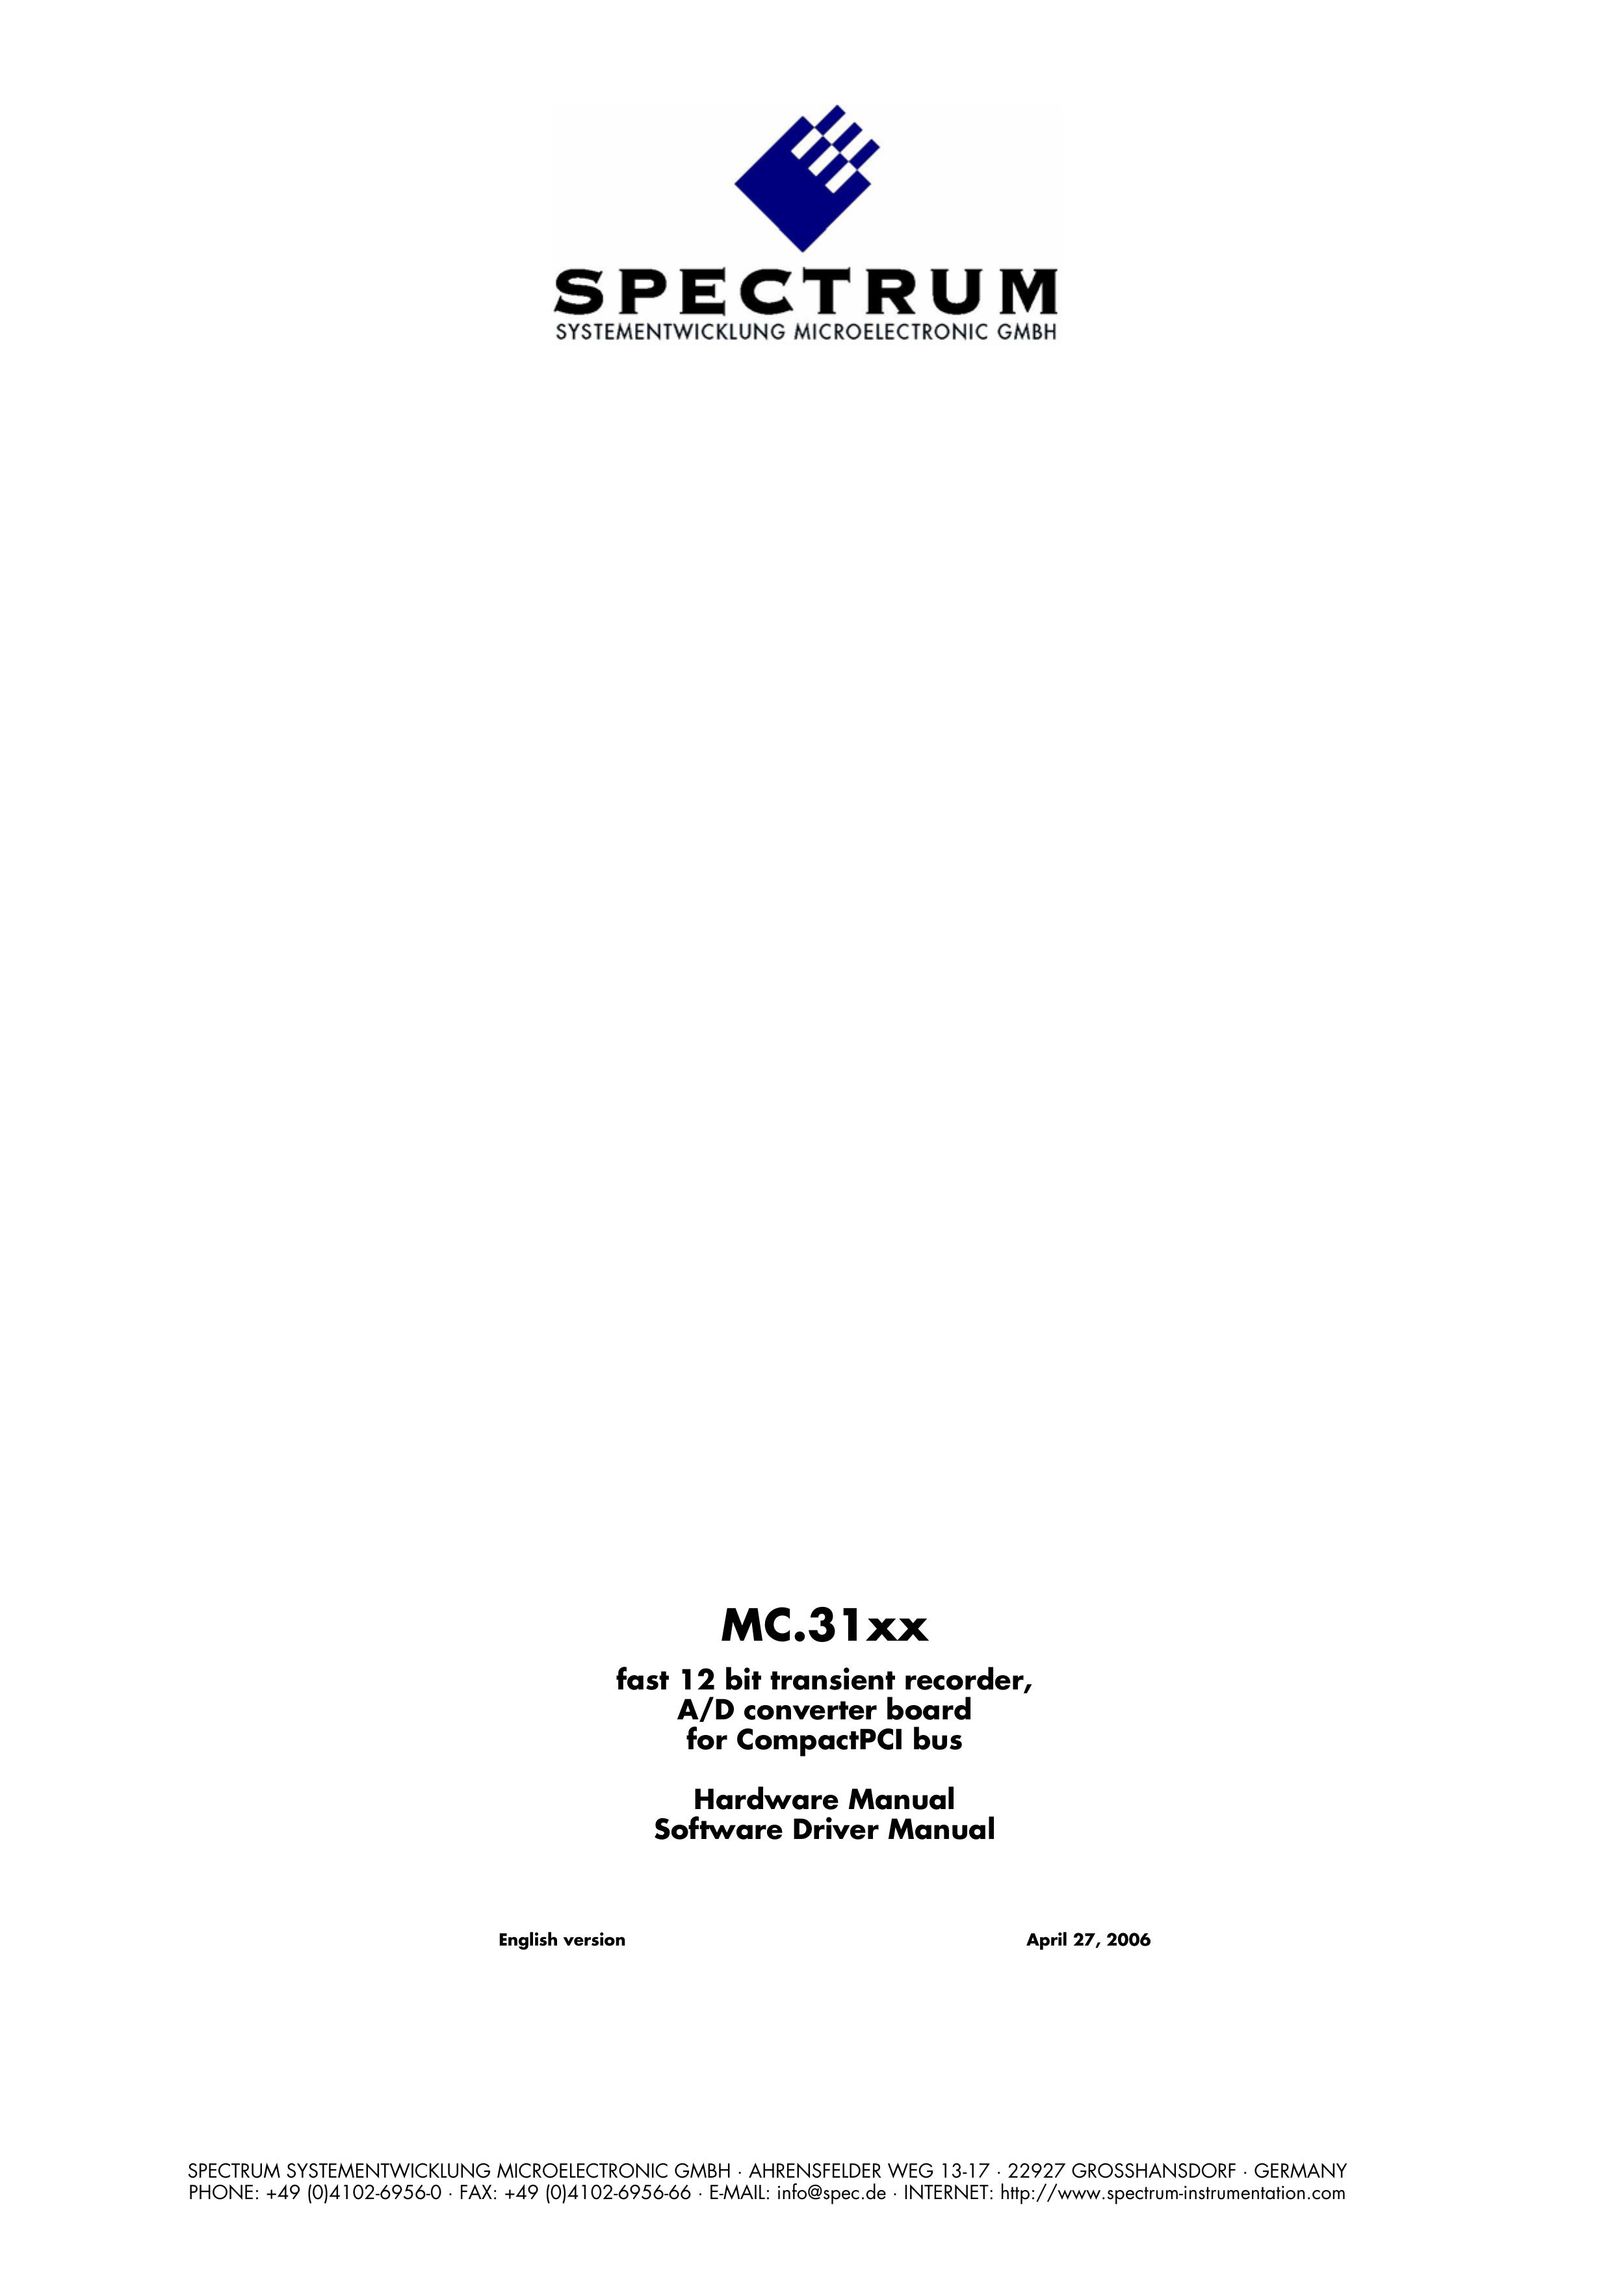 Spectrum Brands MC.31XX Computer Hardware User Manual